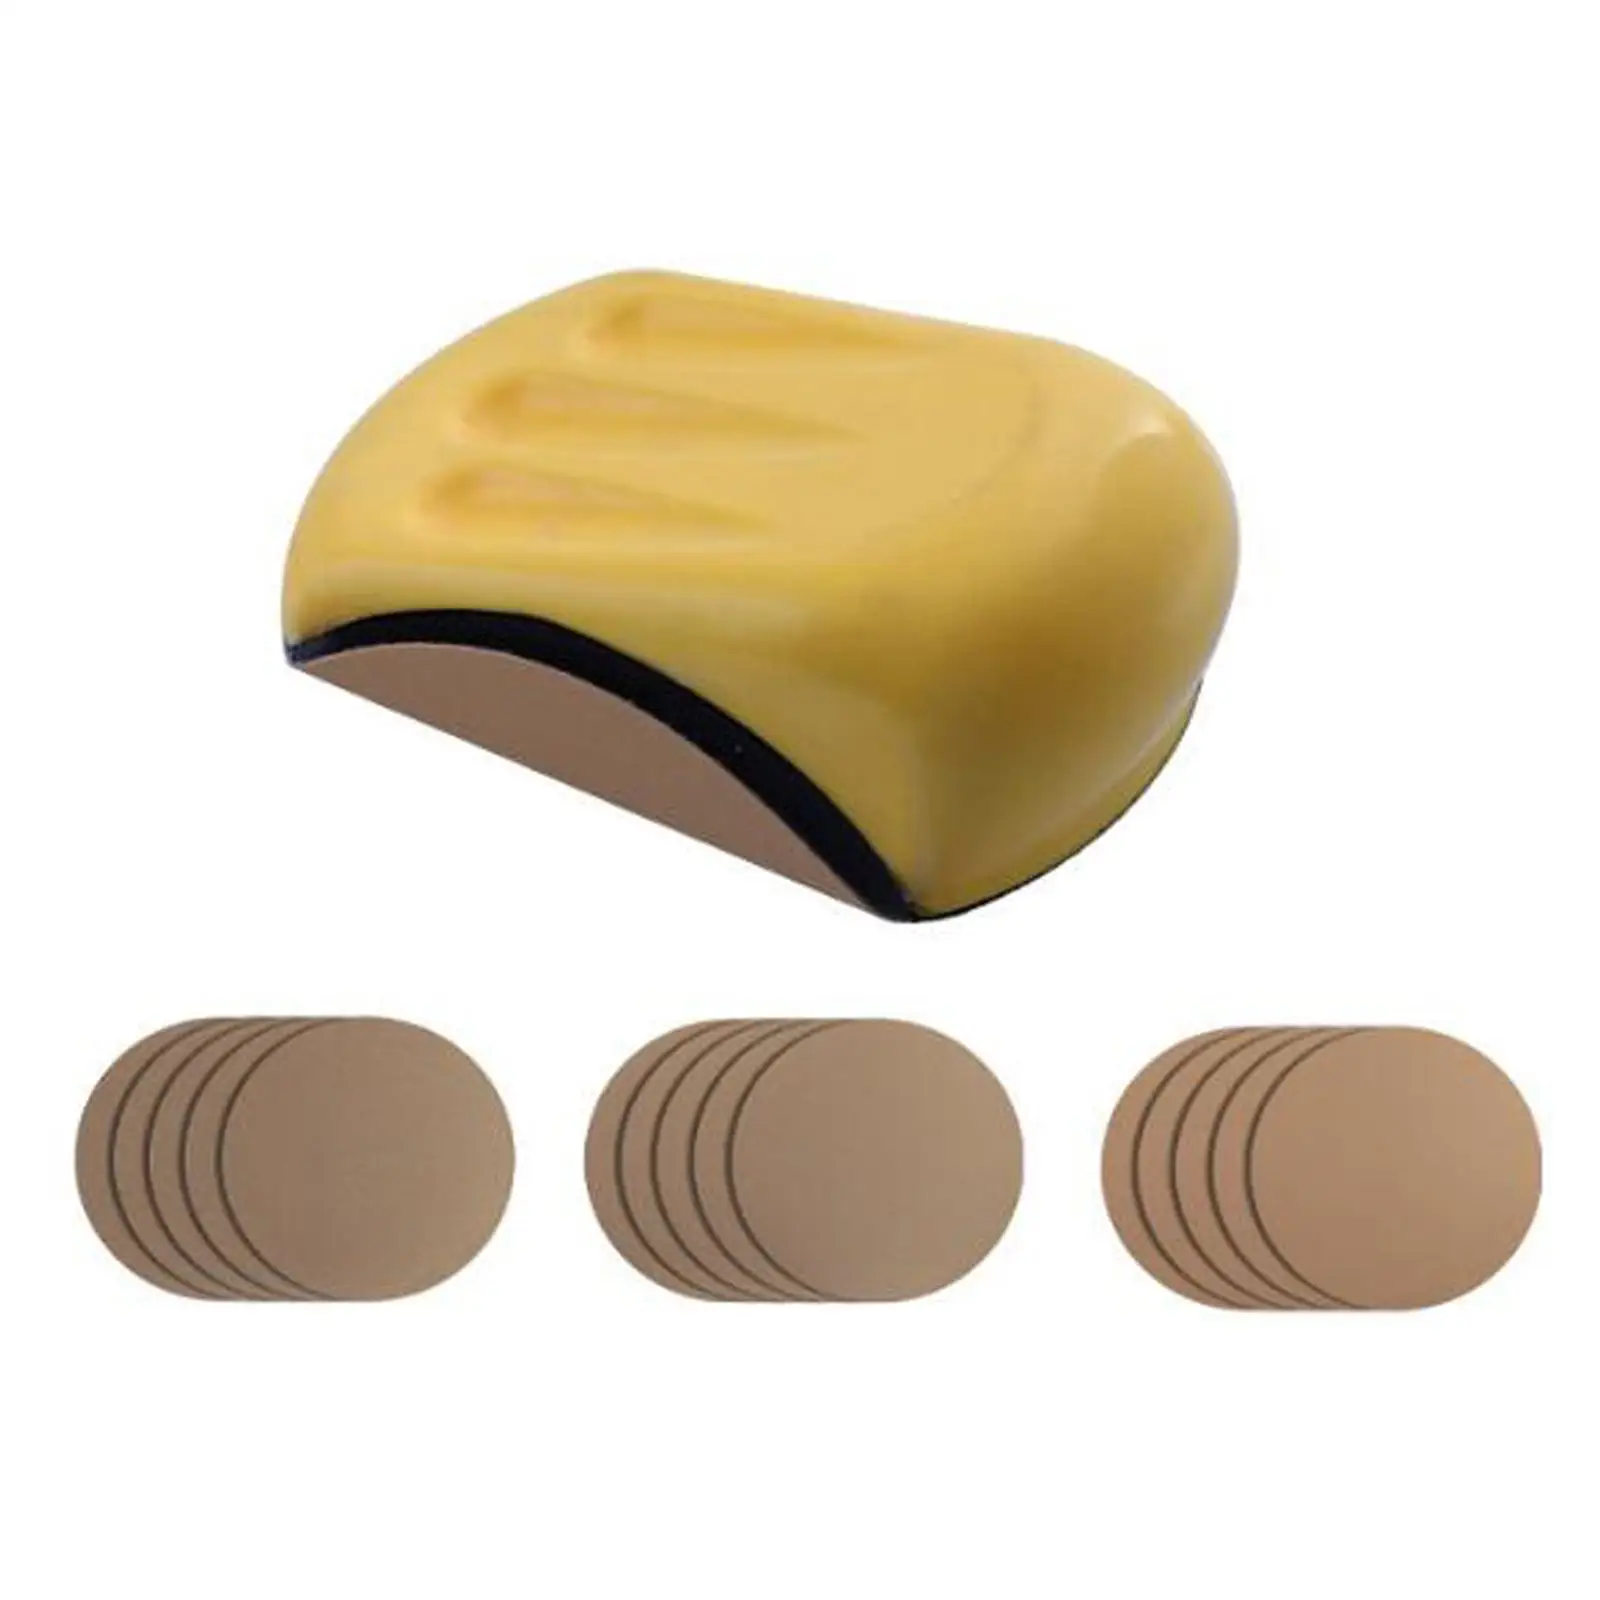 Sanding Kit Polishing Sandpaper Mini Sander for Finishing Wood Products Polishing